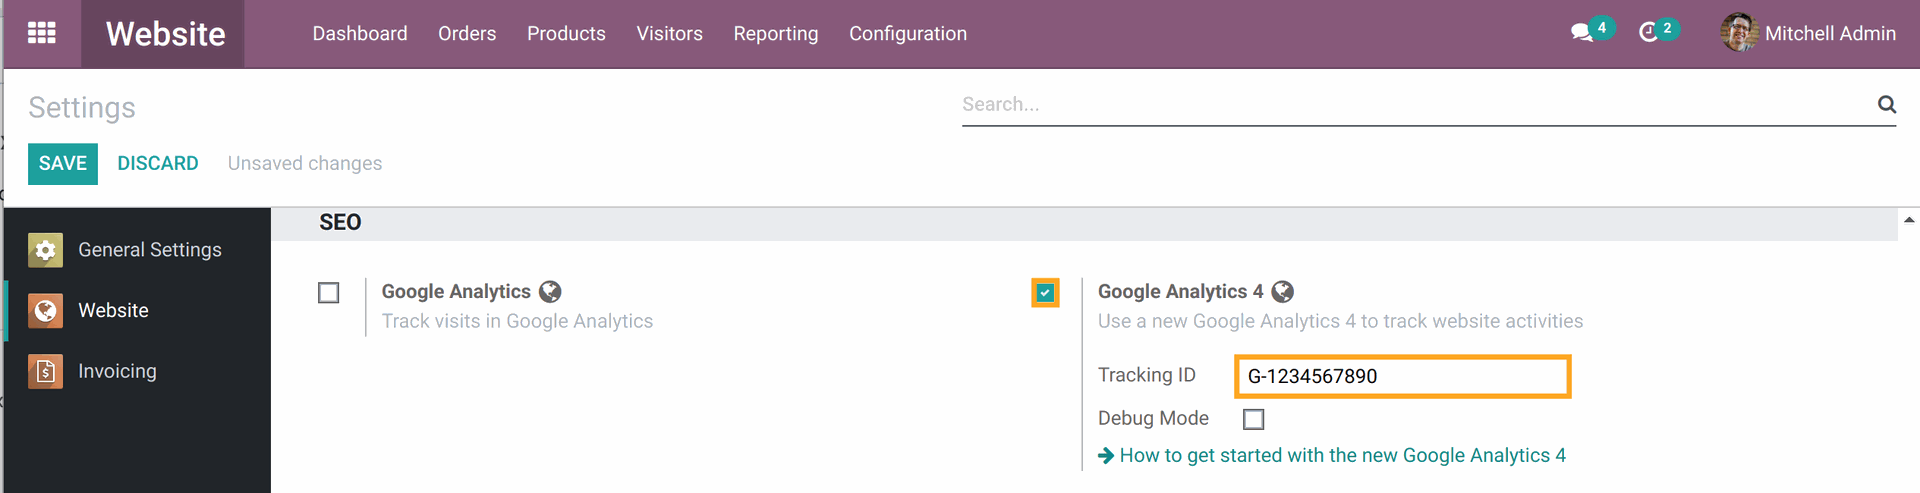 Odoo 17.0 Google Analytics 4 Global Site Tag (gtag.js) configuration